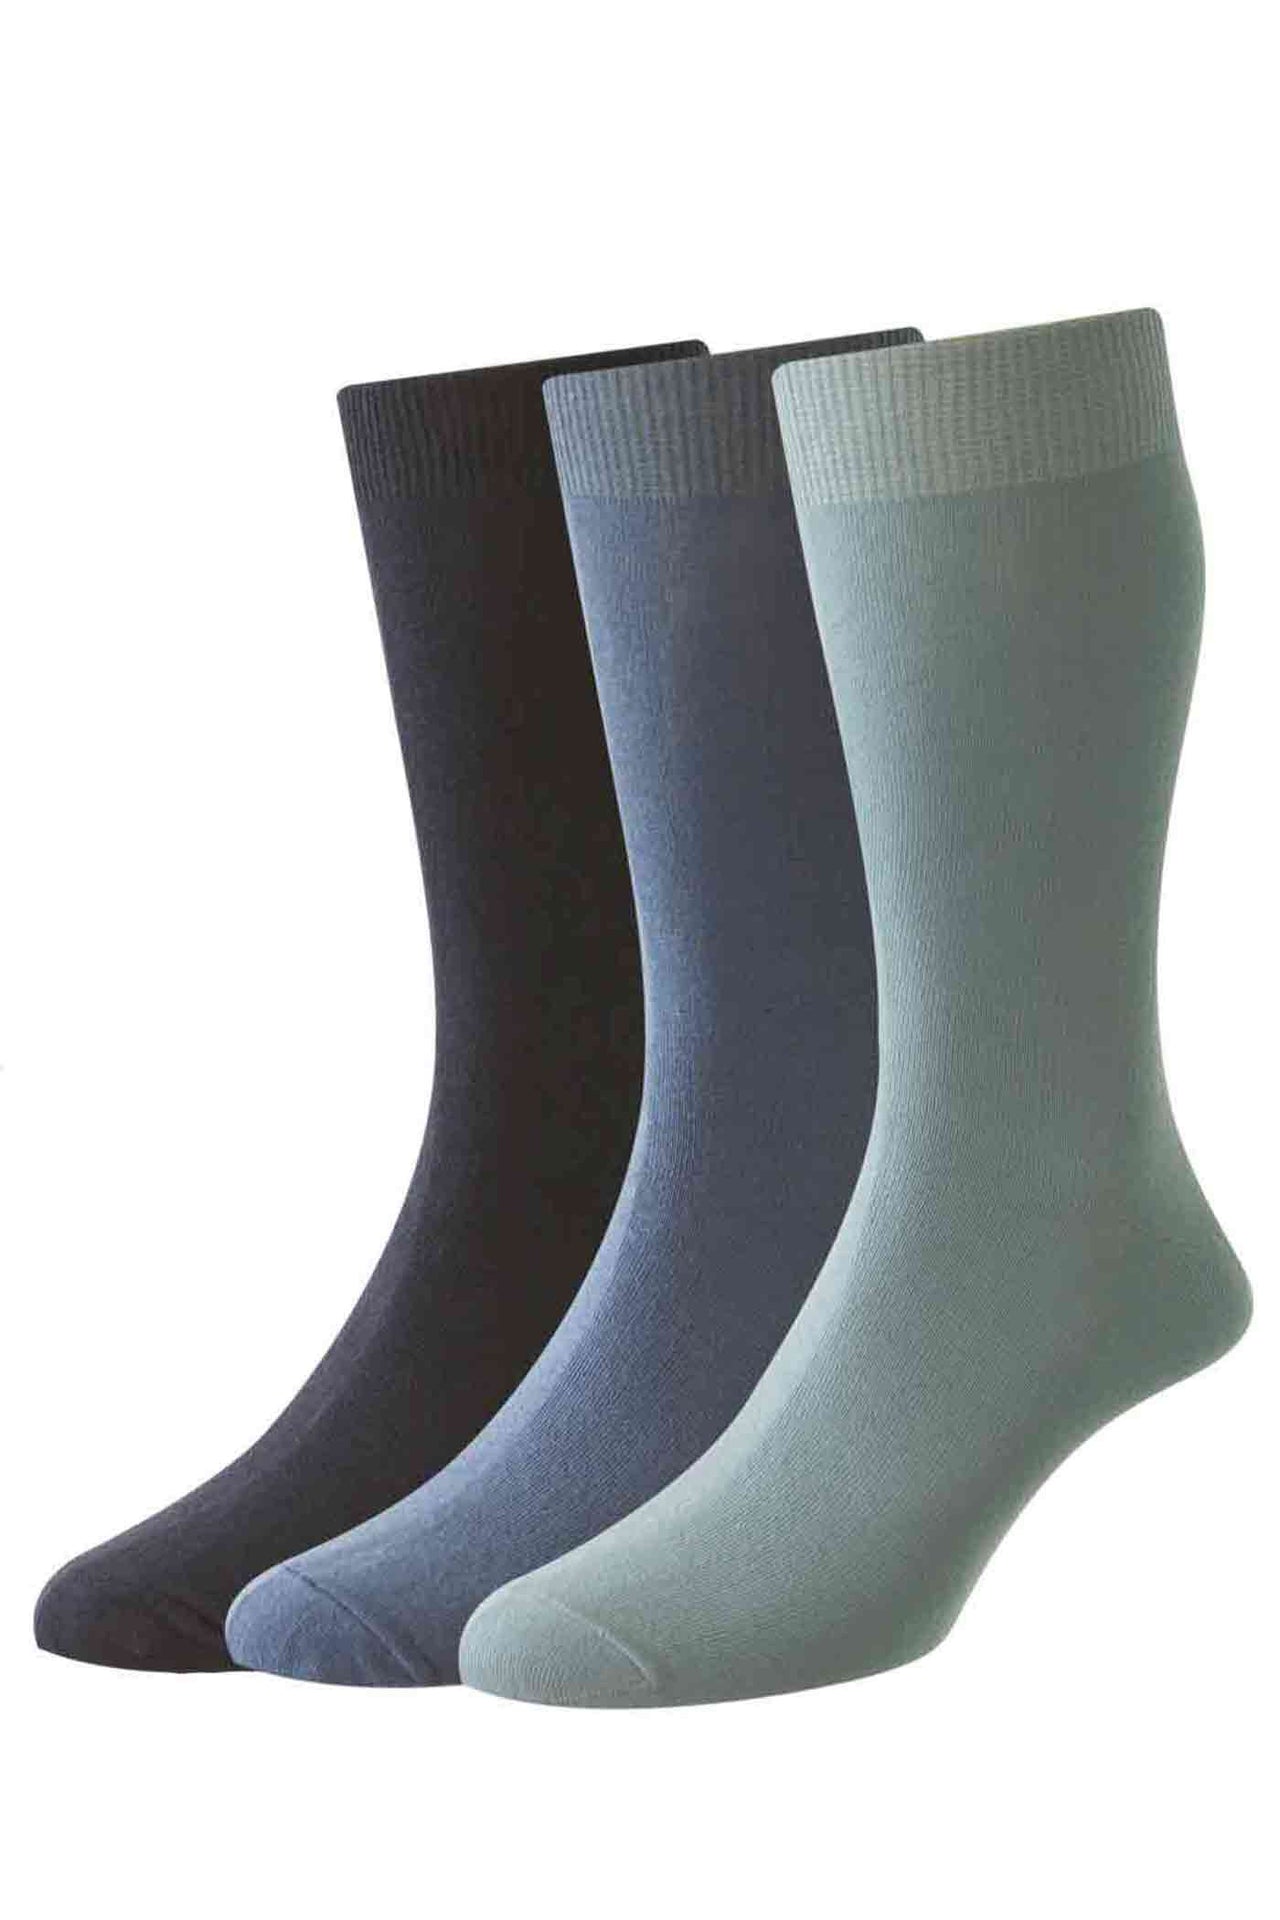 HJ Hall Plain Knit Blue Mix Cotton Socks 3 Pack